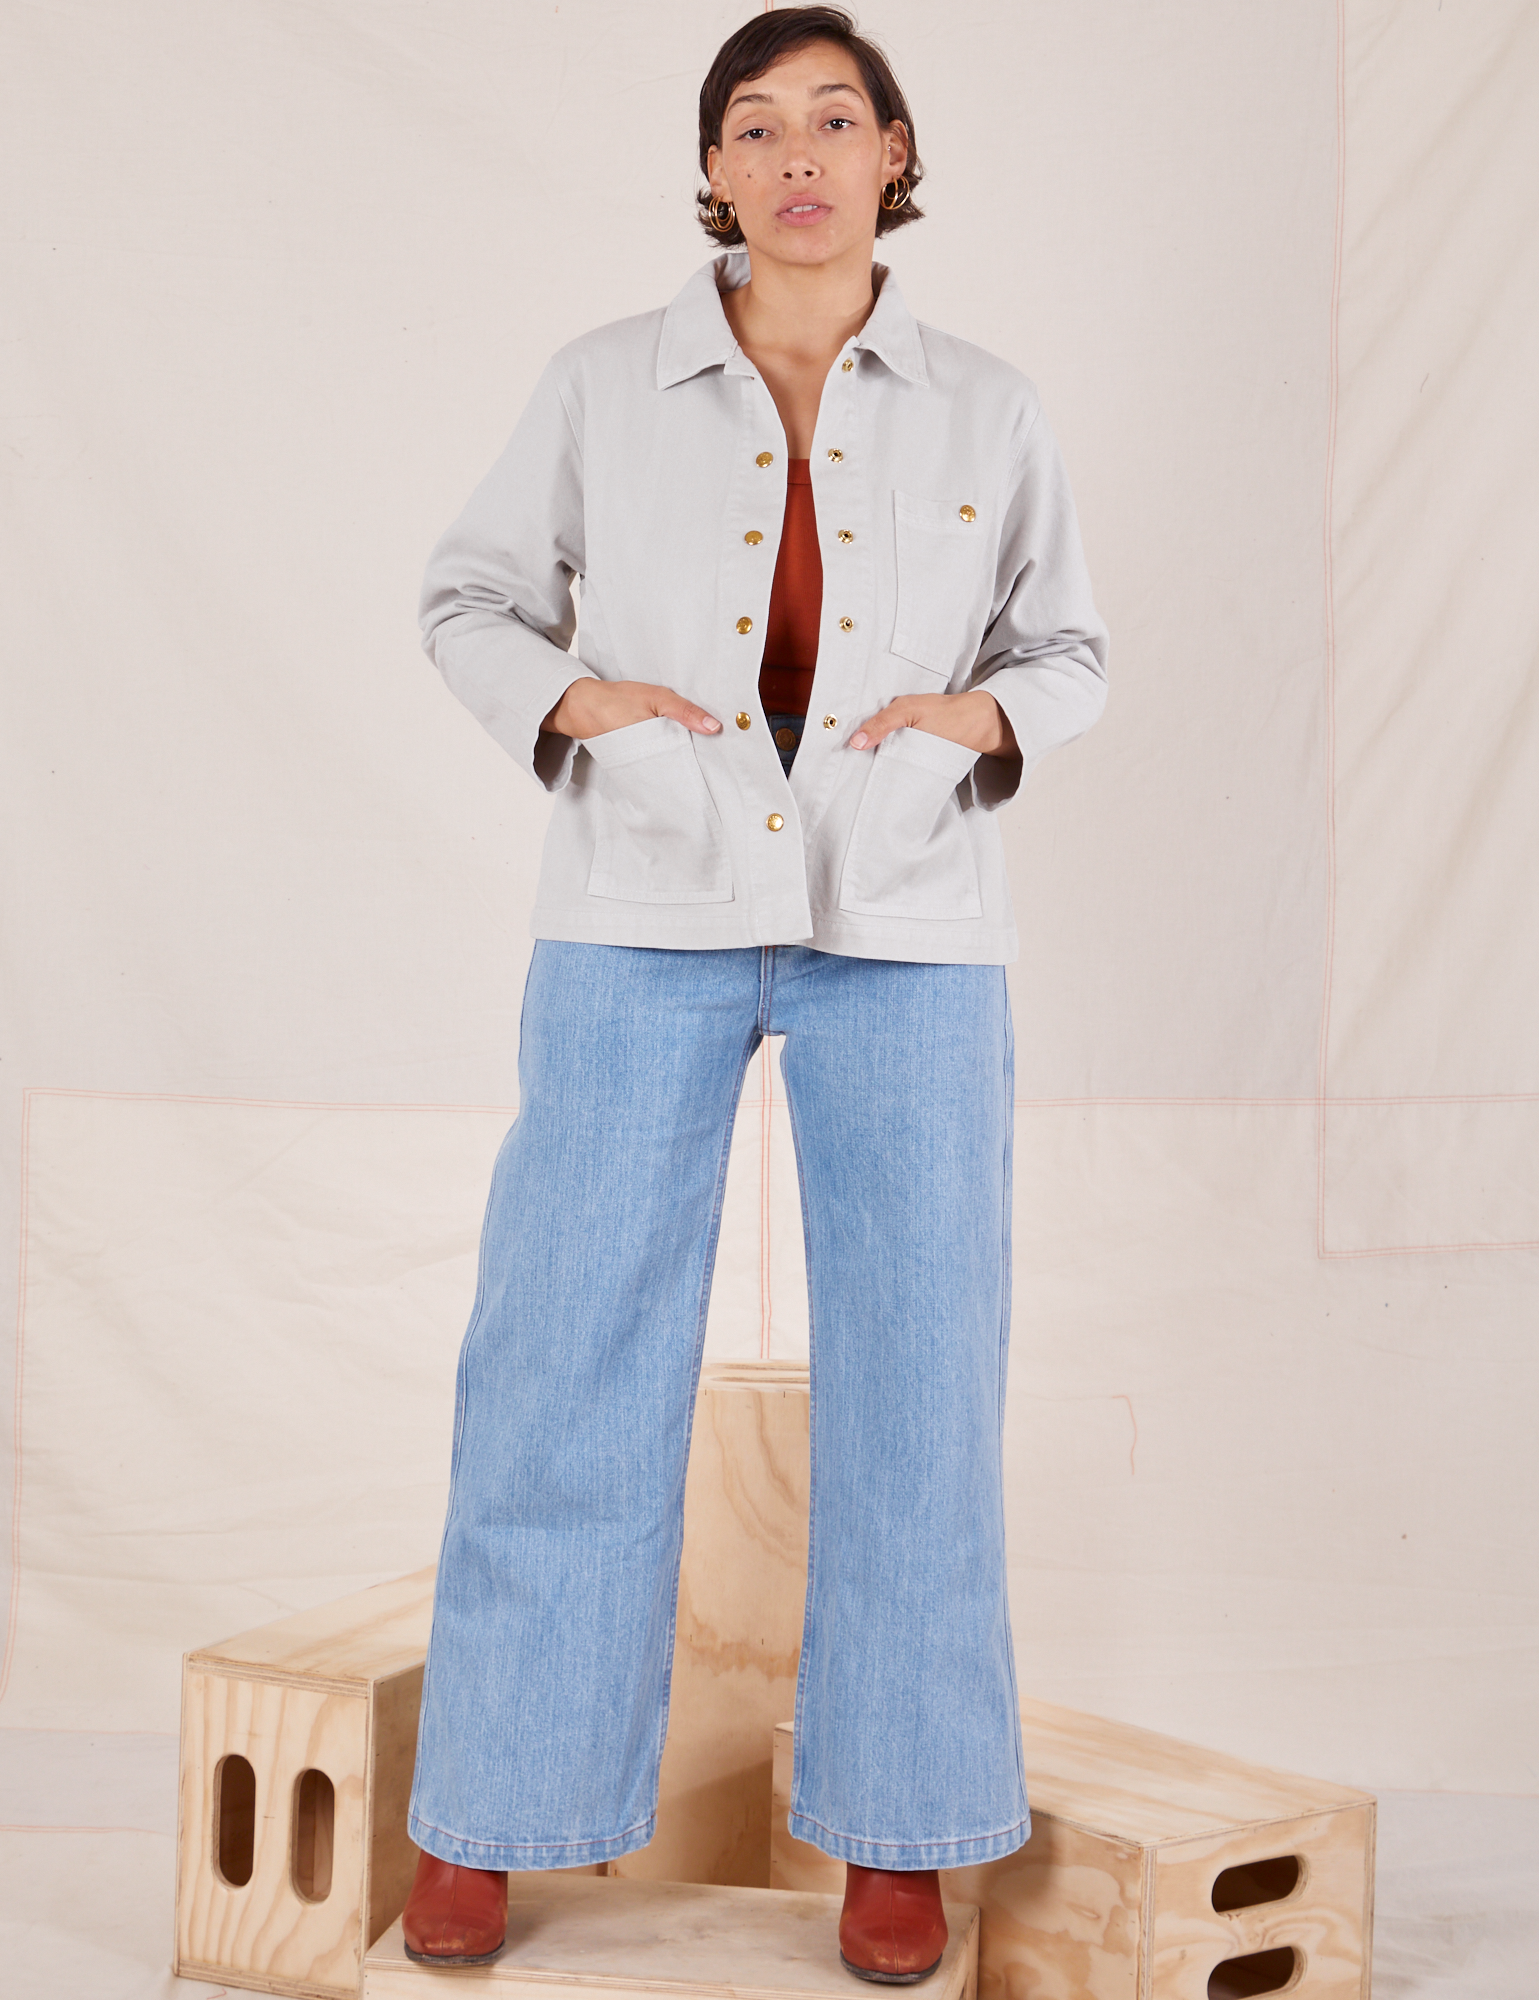 Tiara is wearing Denim Work Jacket in Dishwater White and light wash Sailor Jeans